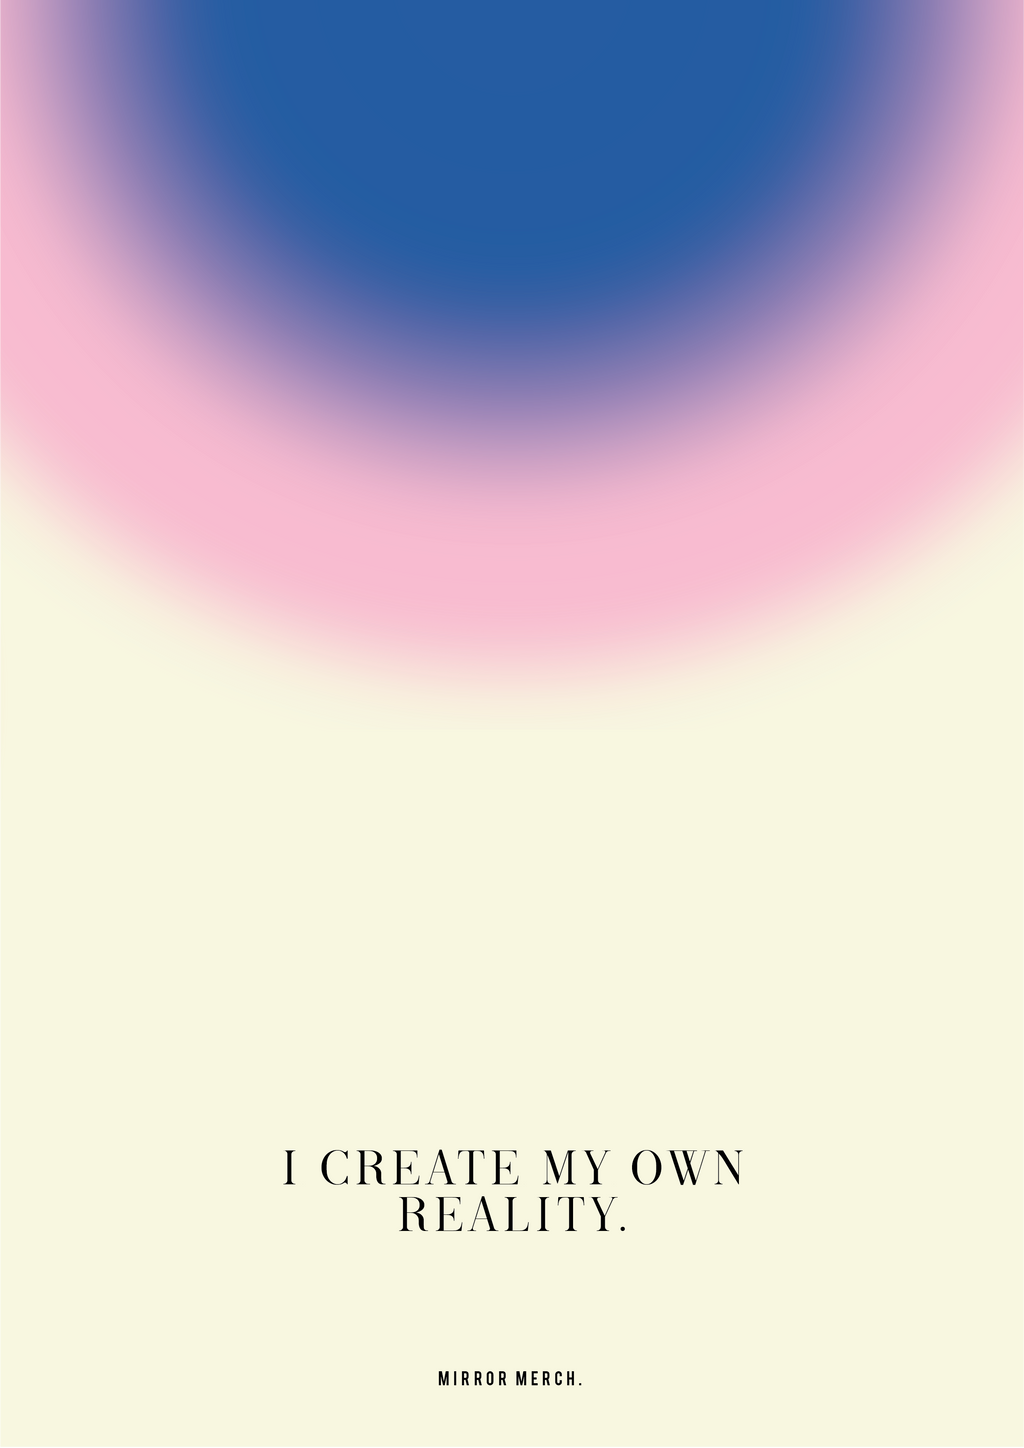 I create my own reality